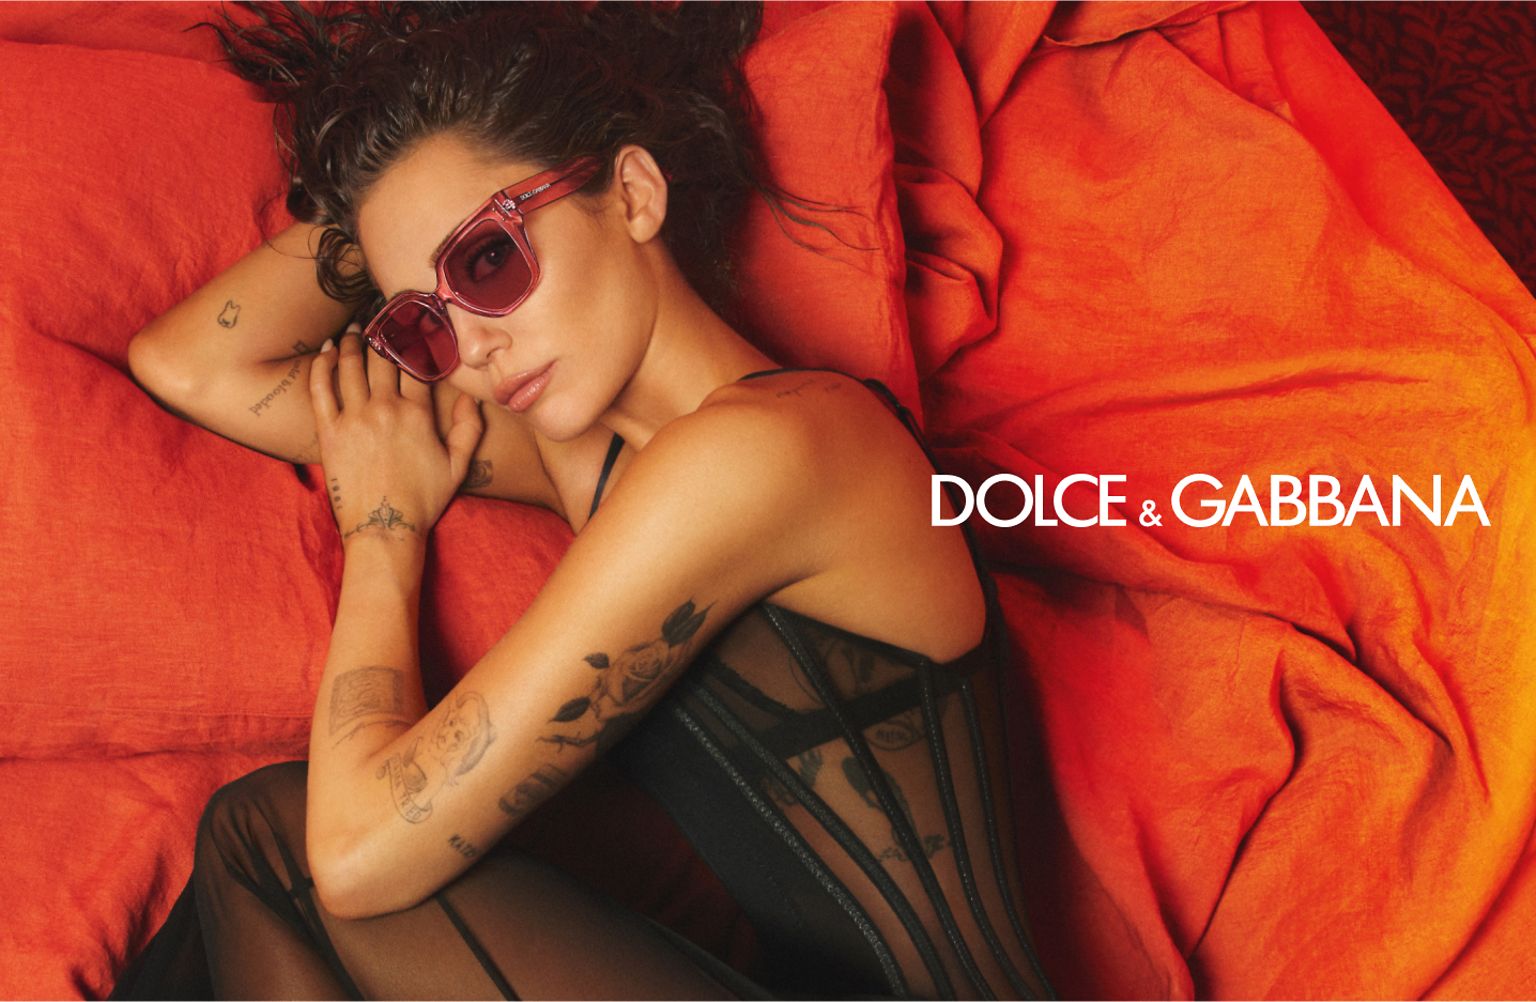 Dolce & Gabbana Kids DG-buckle patent-leather belt - Yellow